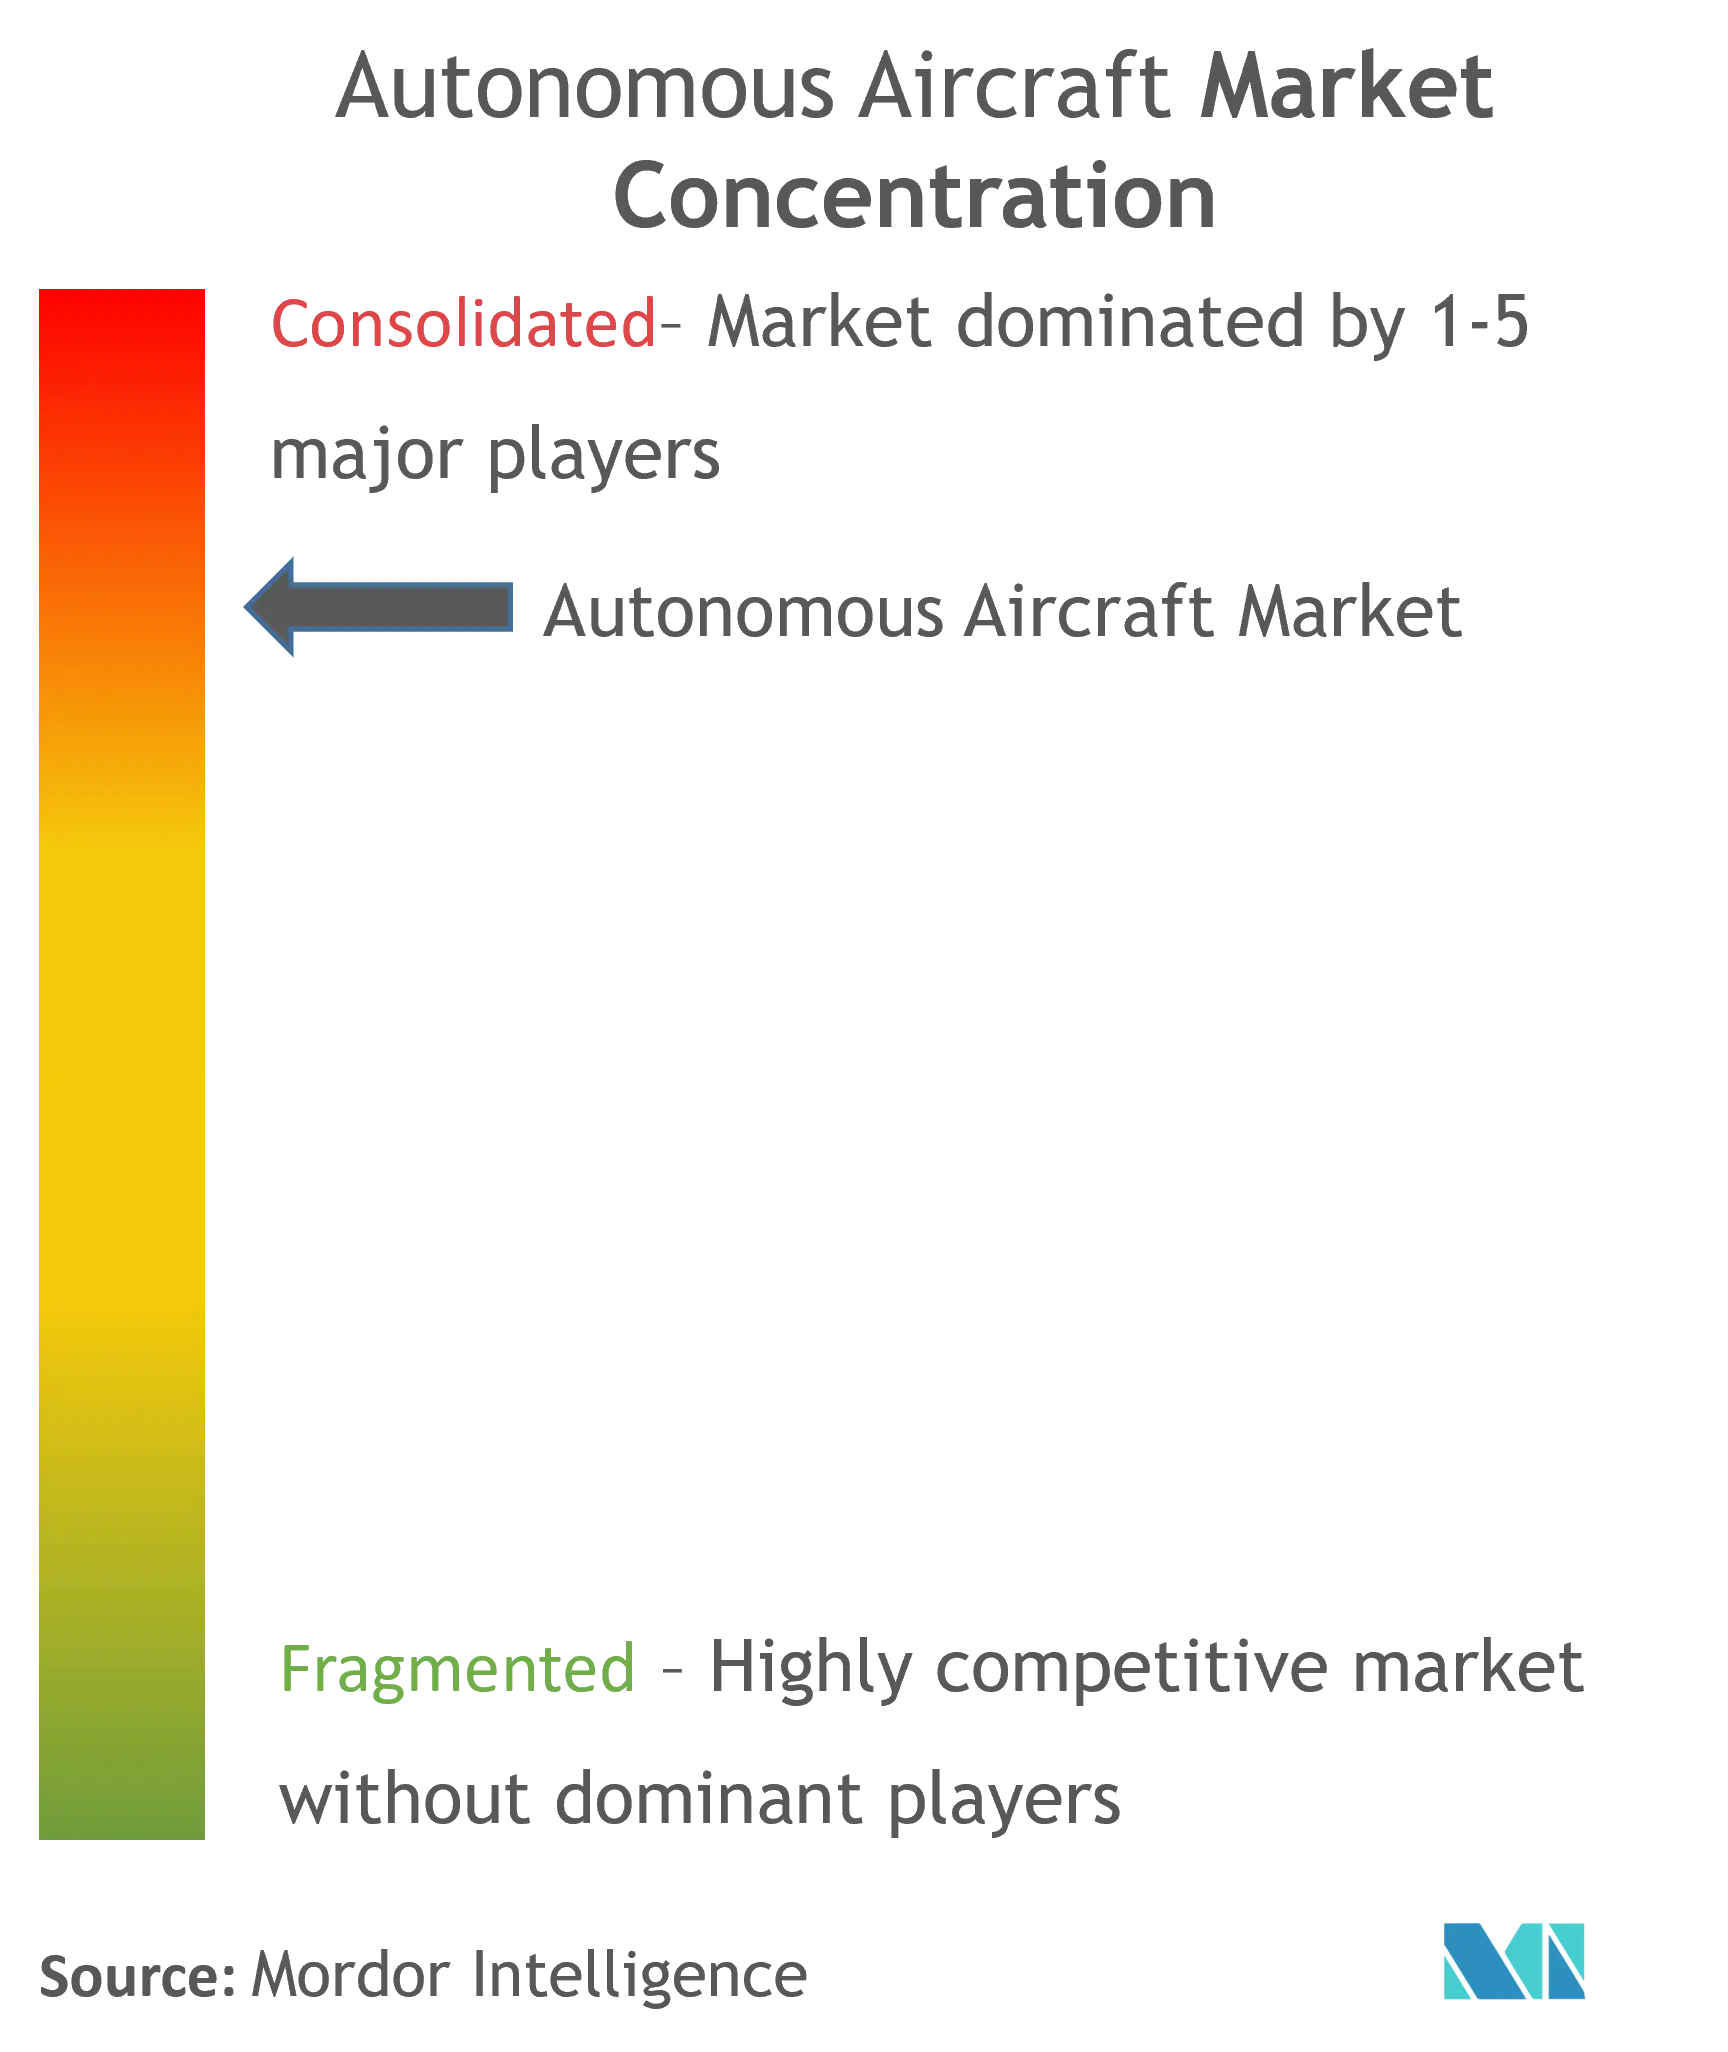 Autonome FlugzeugeMarktkonzentration